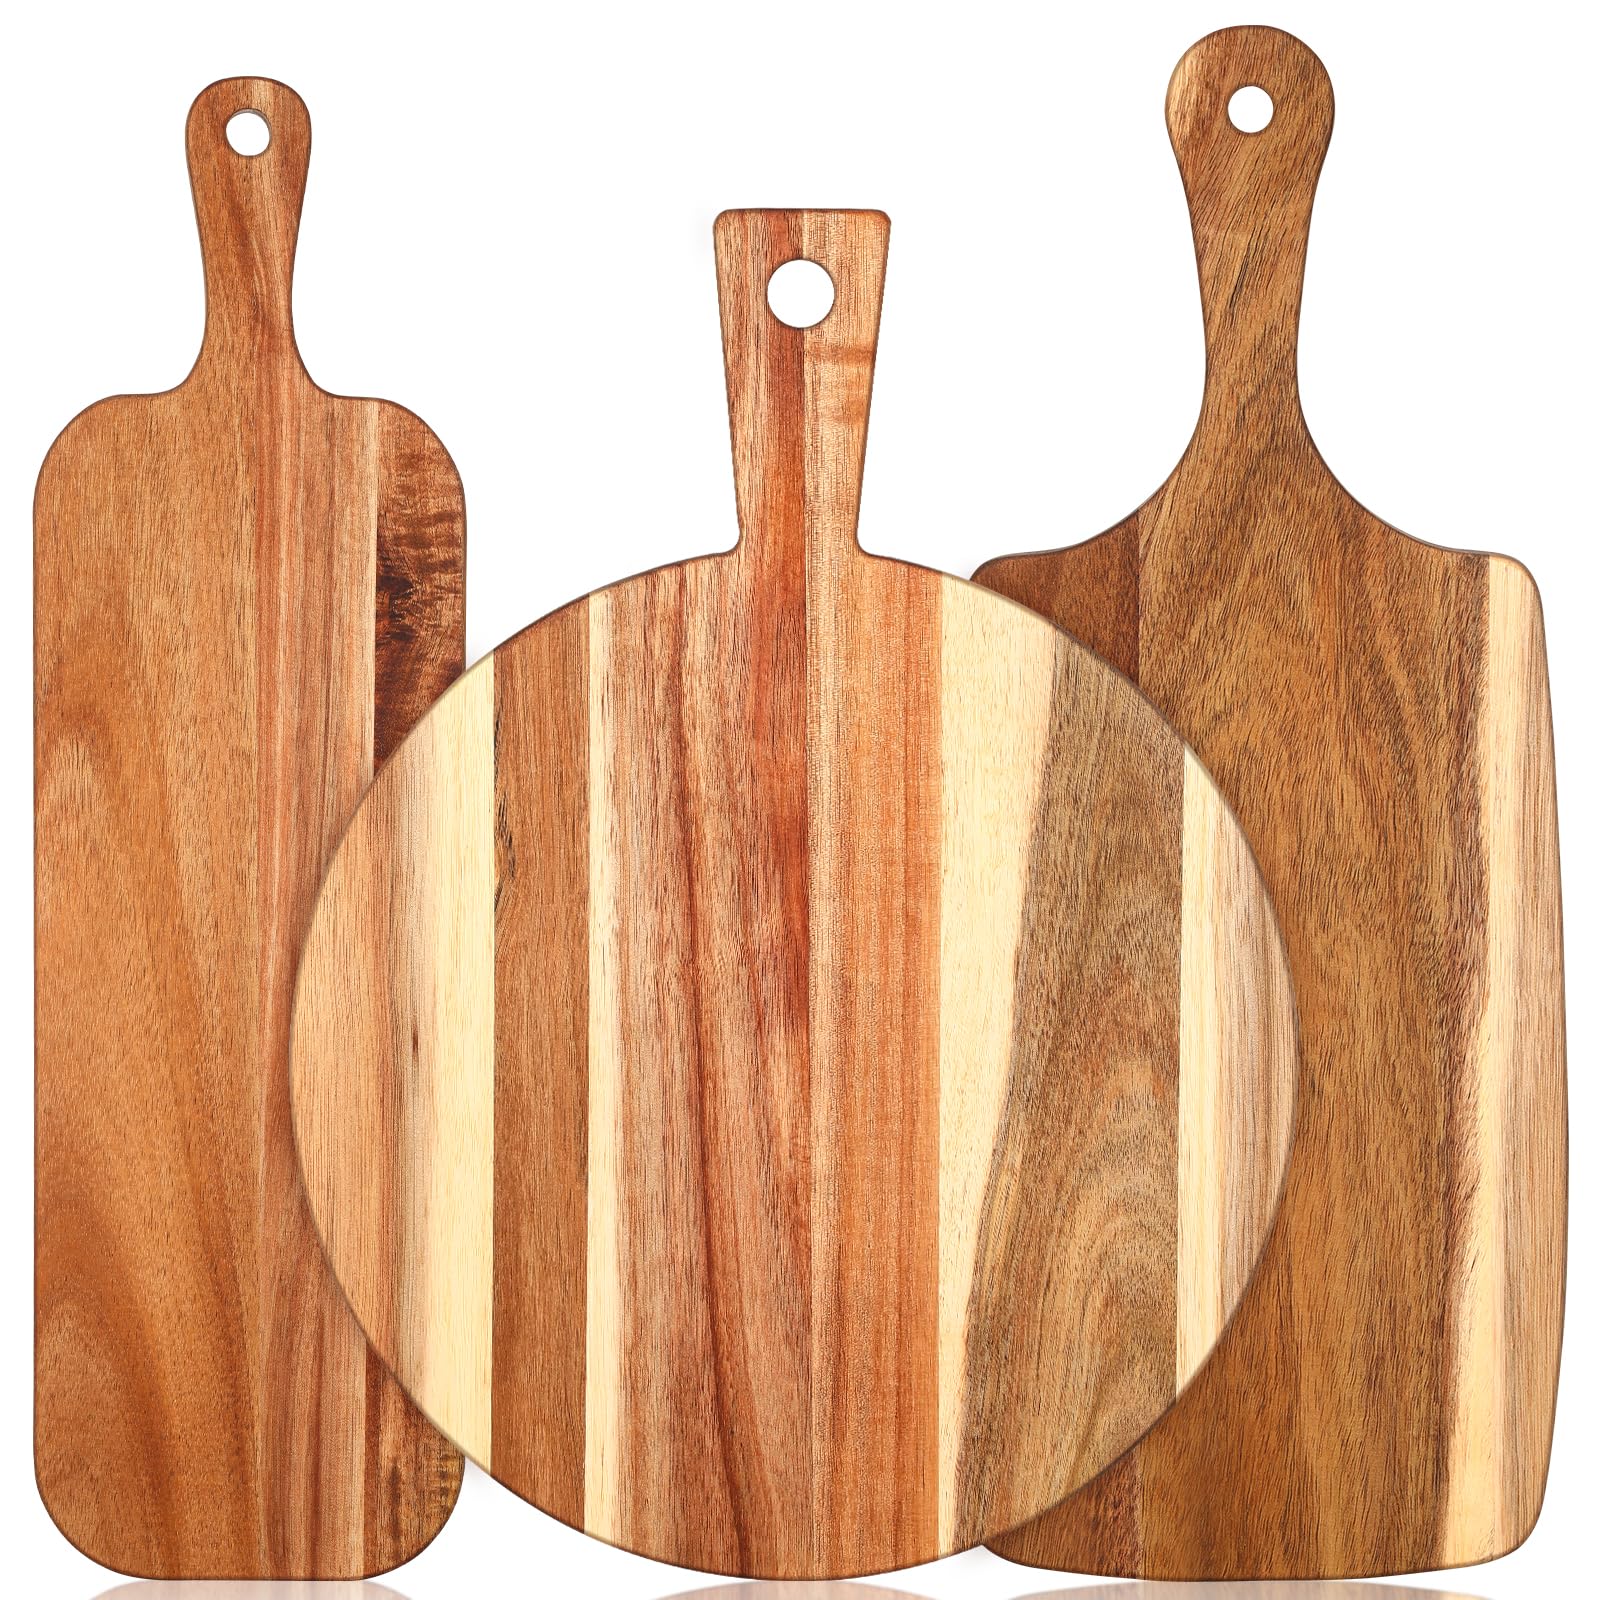 I-Shangrun 3 Pcs Acacia Wood Cutting Board eneHandle